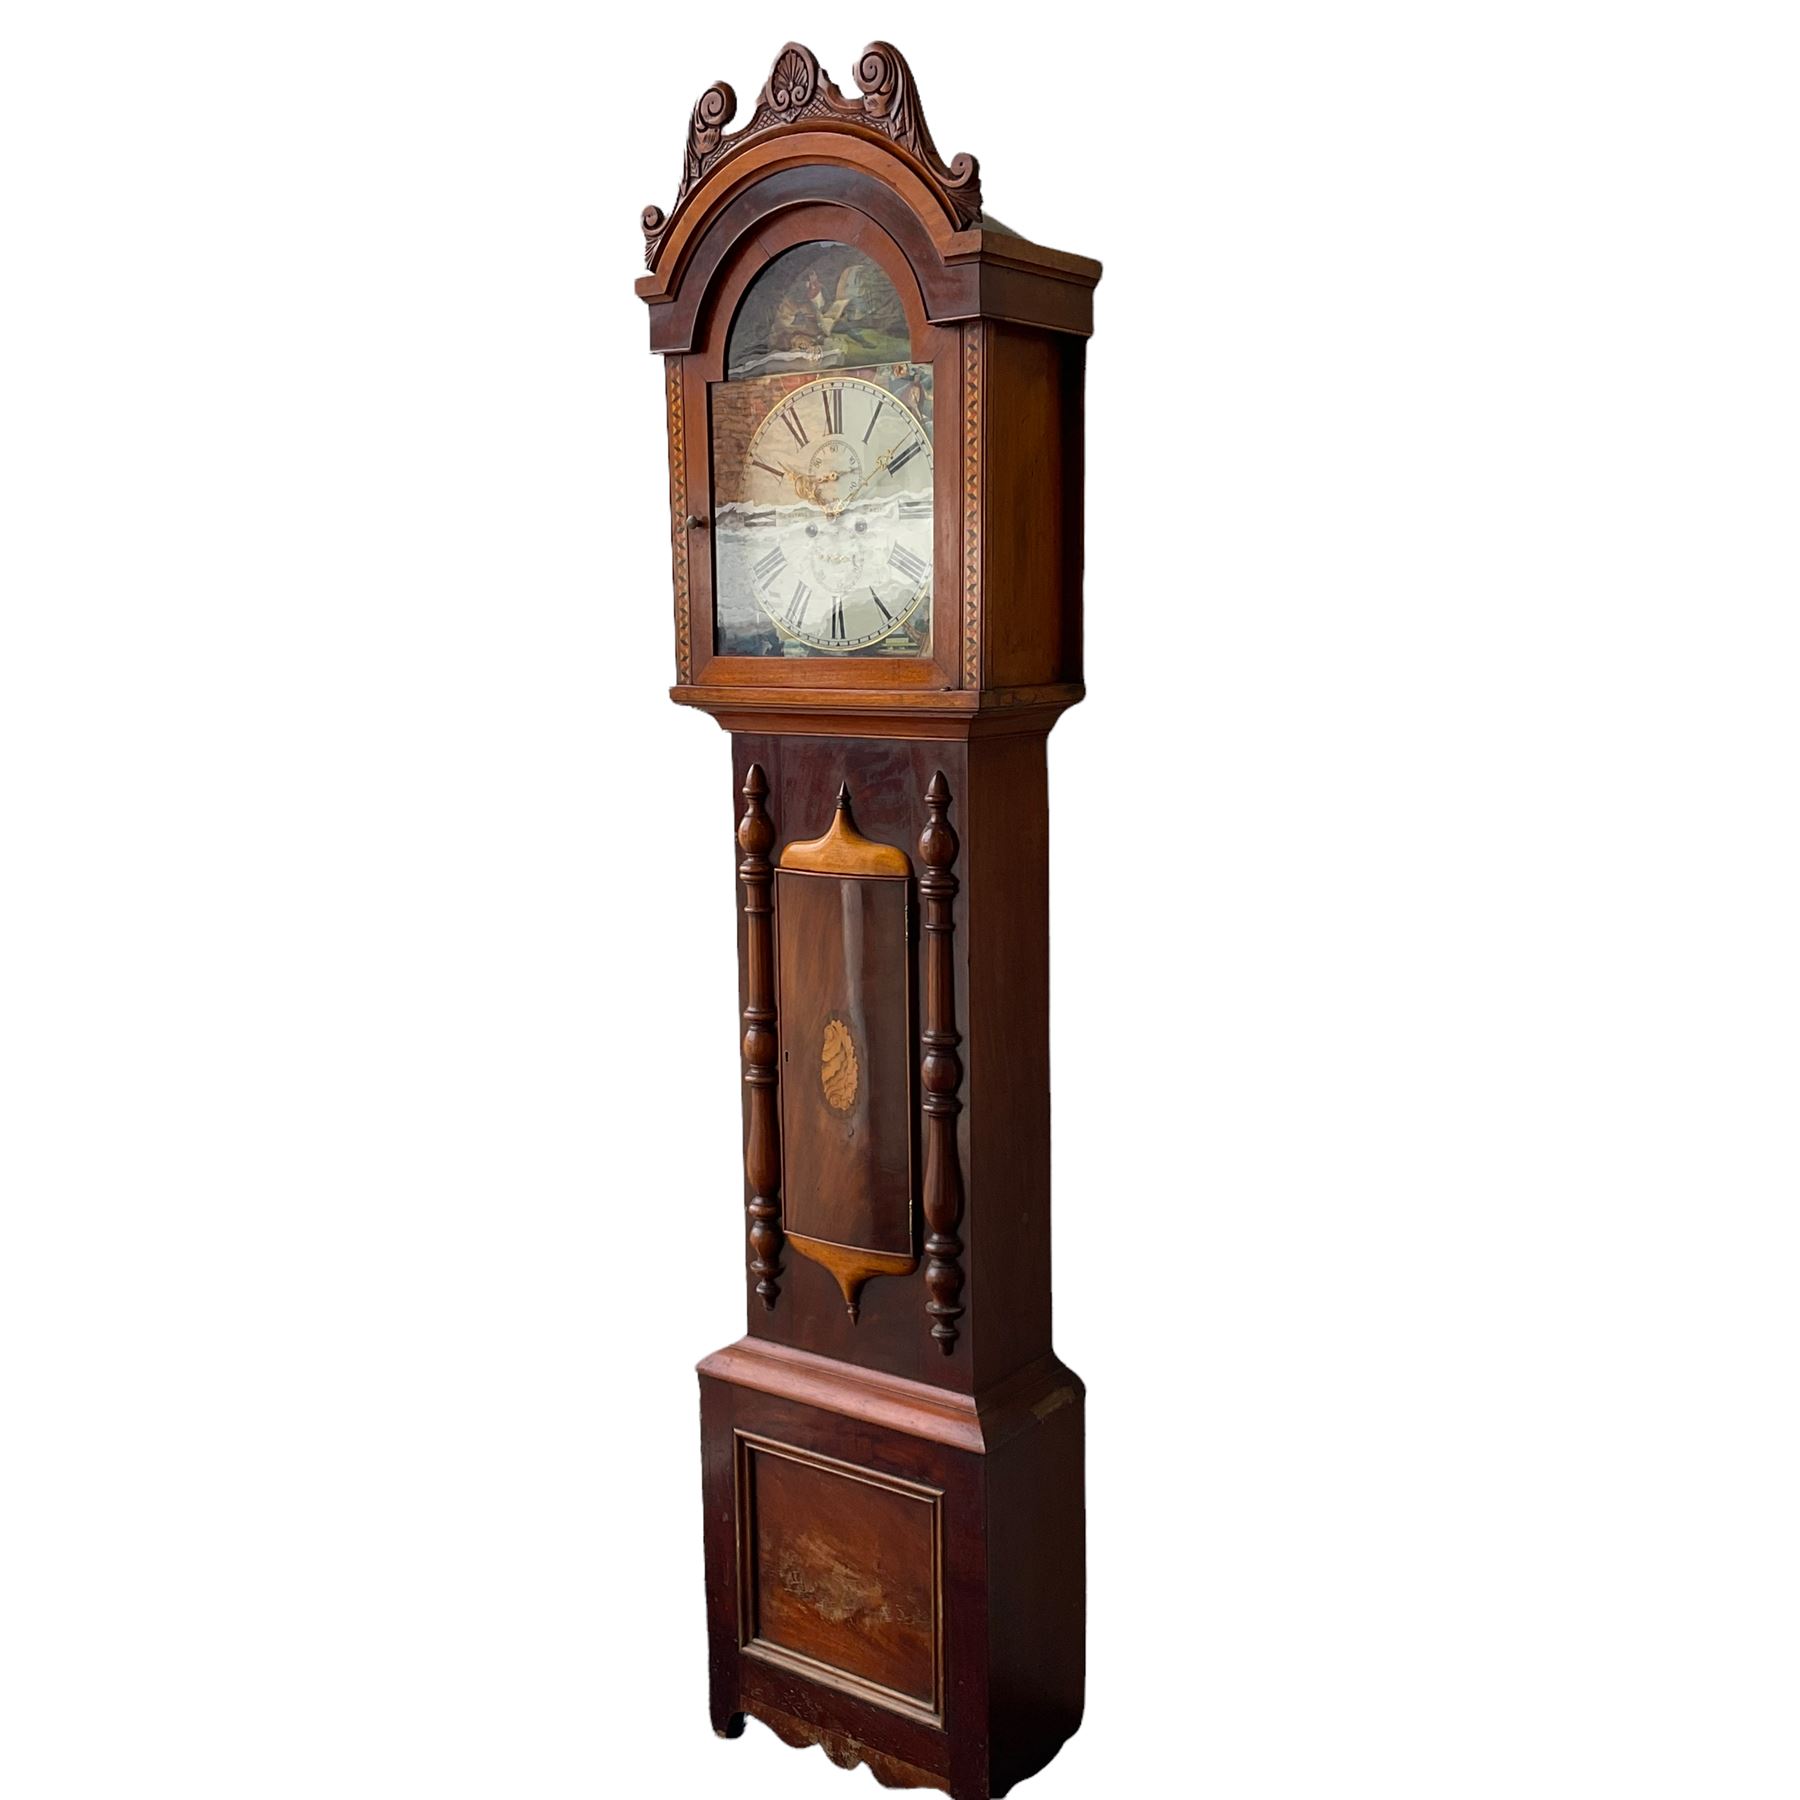 A Scottish longcase clock c 1890 in a contrasting light and dark mahogany veneered case - Image 2 of 4